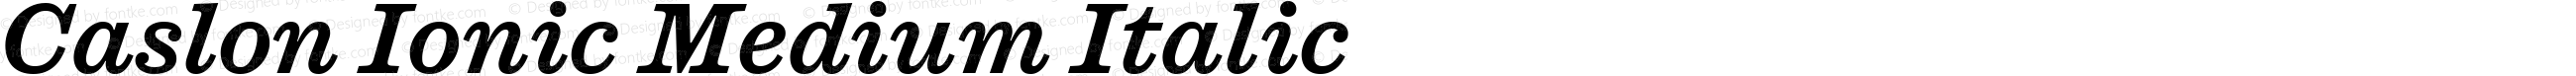 Caslon Ionic Medium Italic